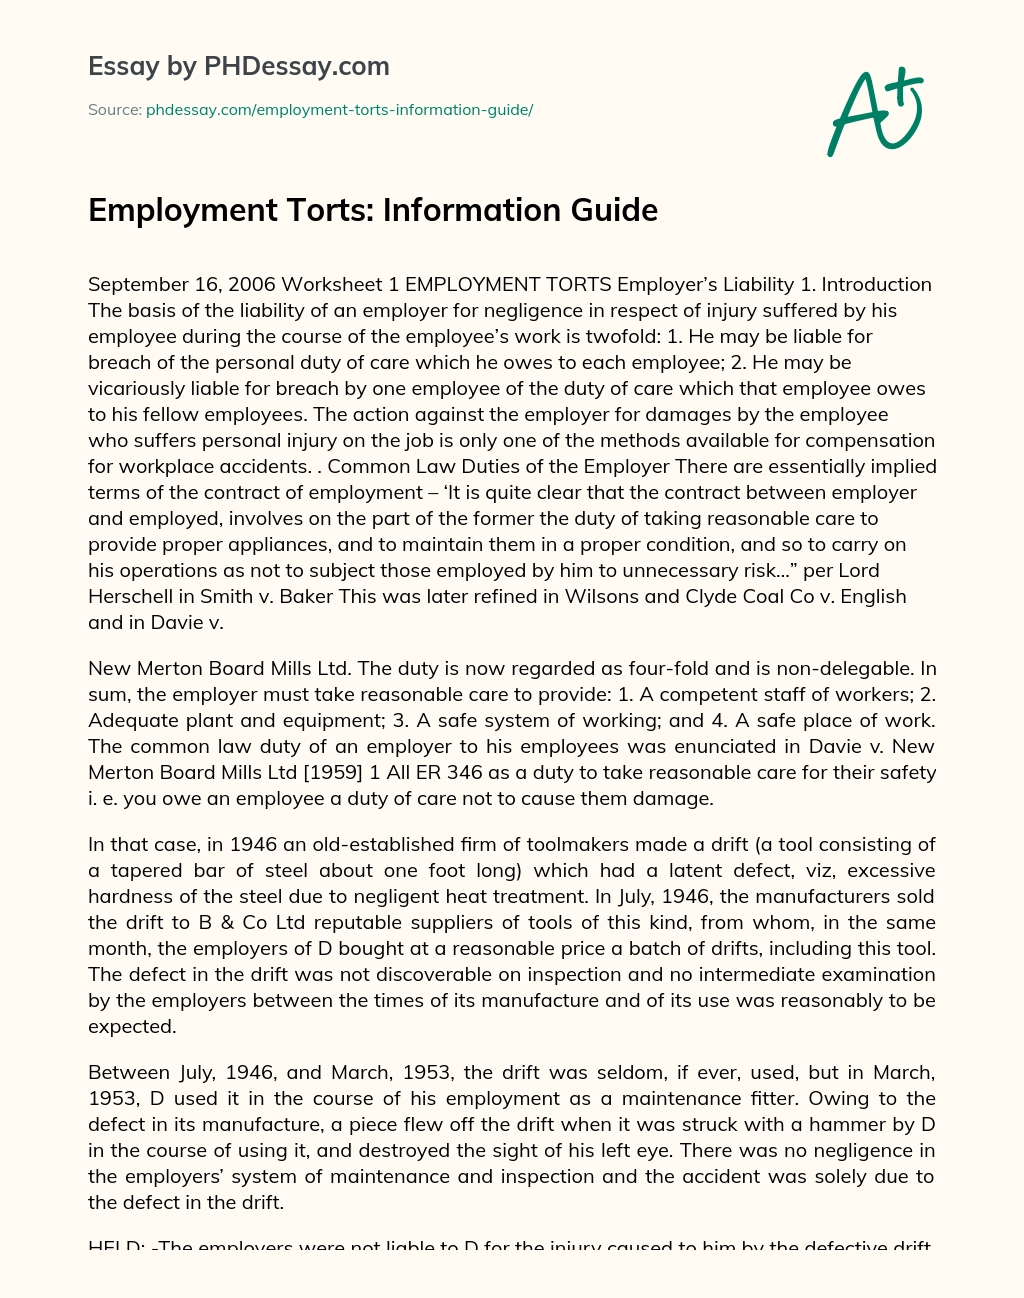 Employment Torts: Information Guide essay